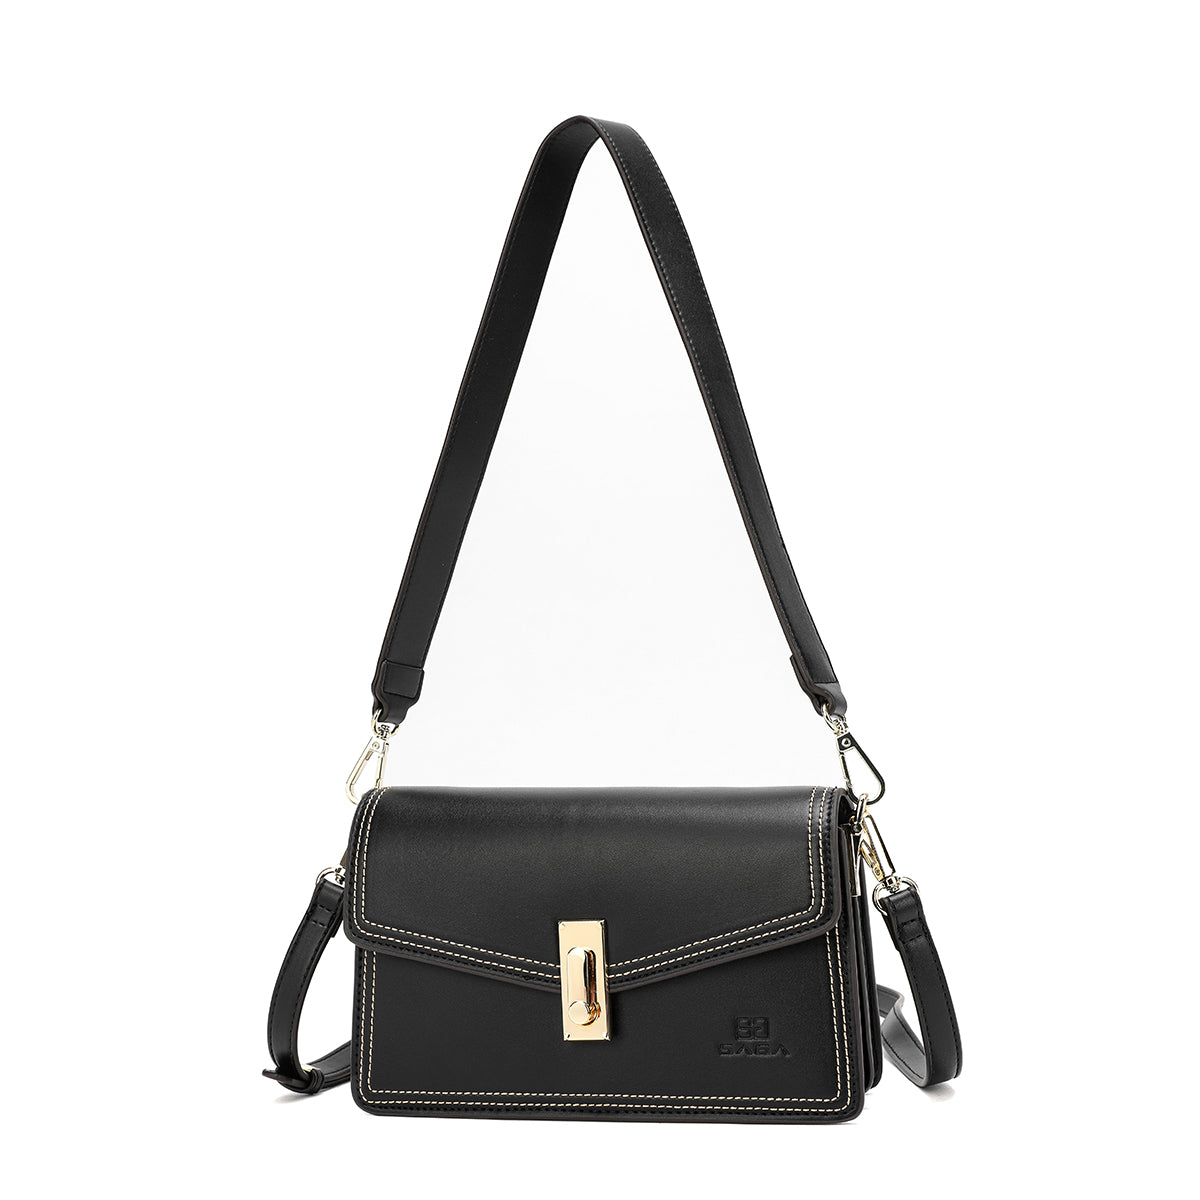 Lightweight and unique handbag